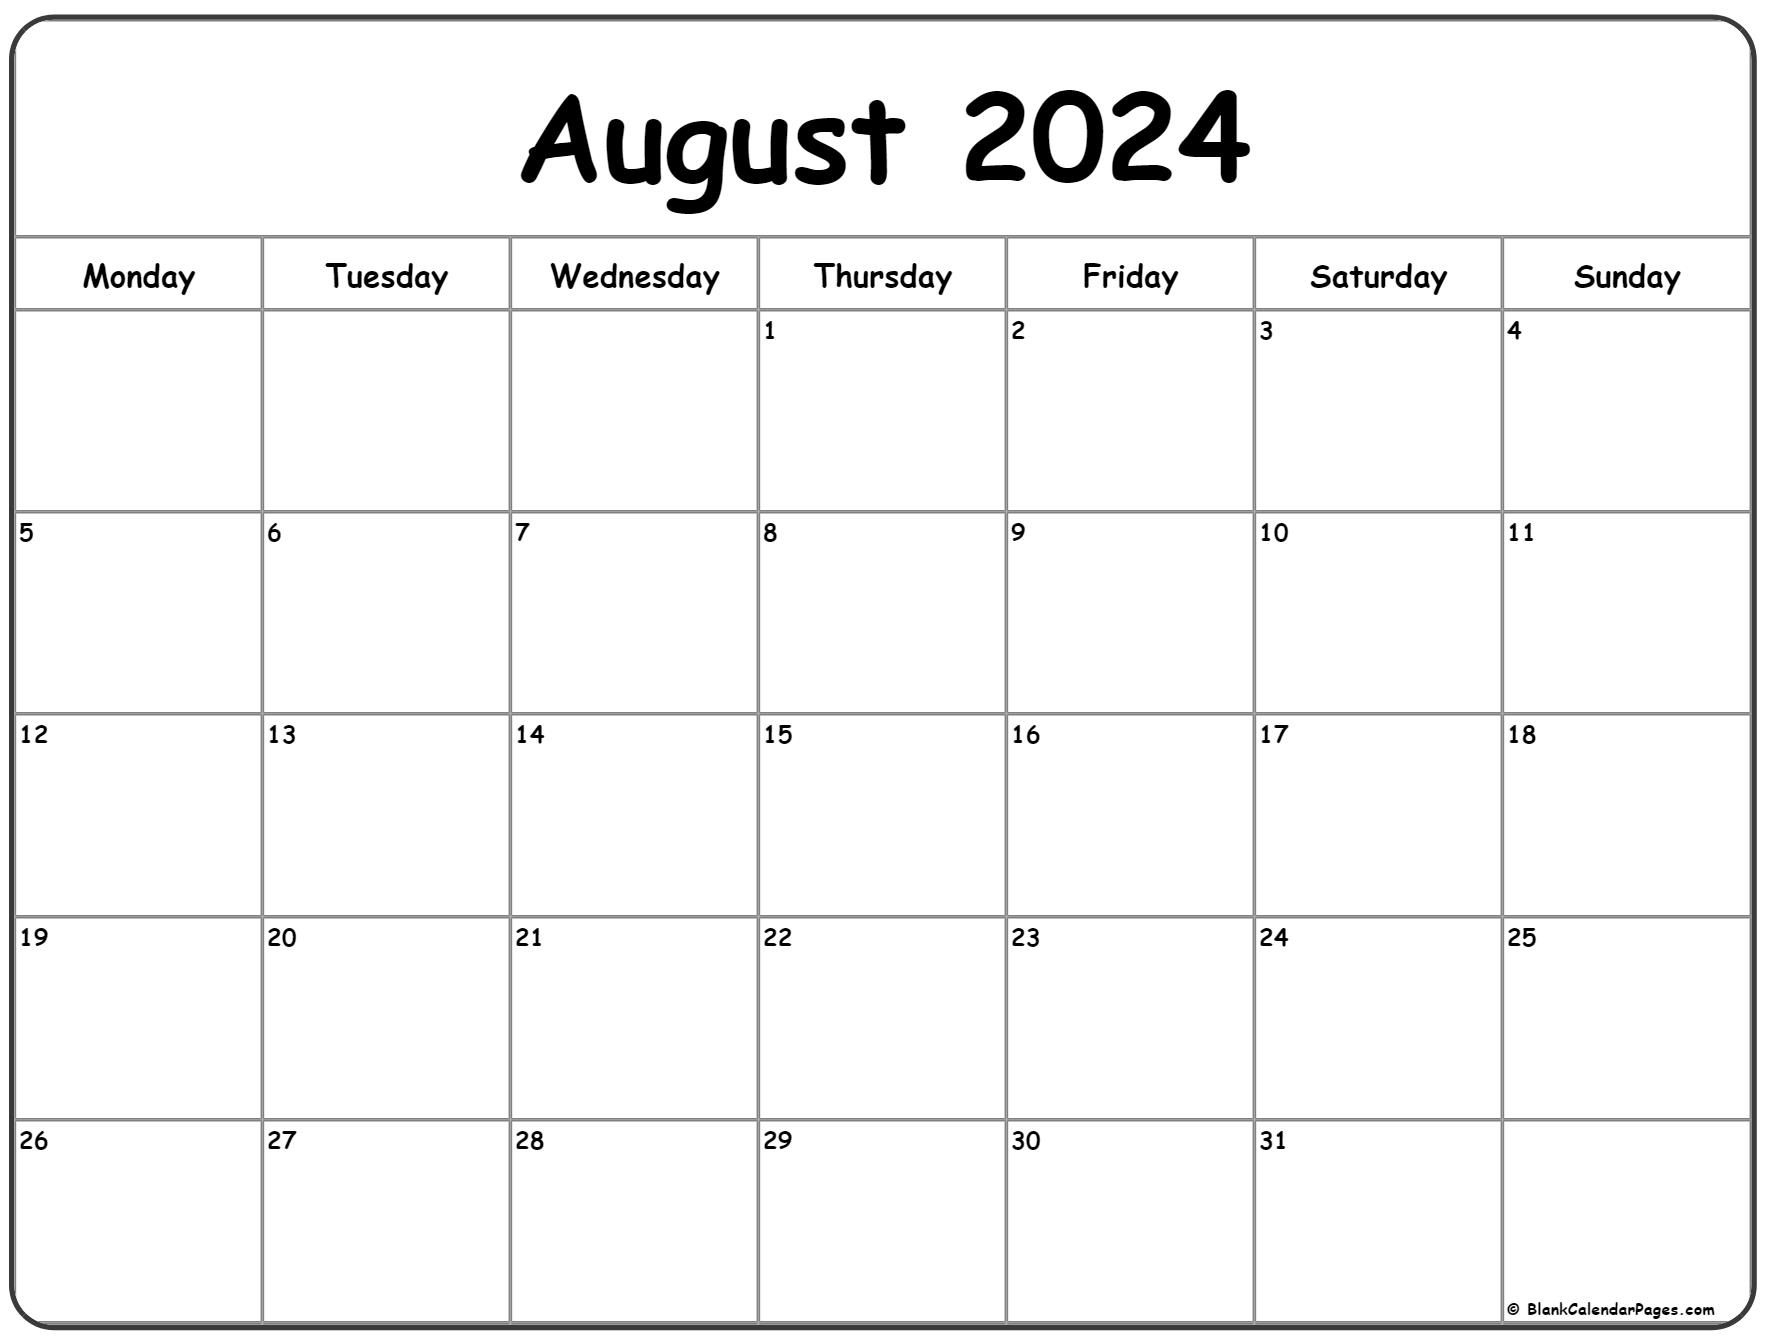 August 2024 Monday Calendar | Monday To Sunday for Printable Calendar August 2024